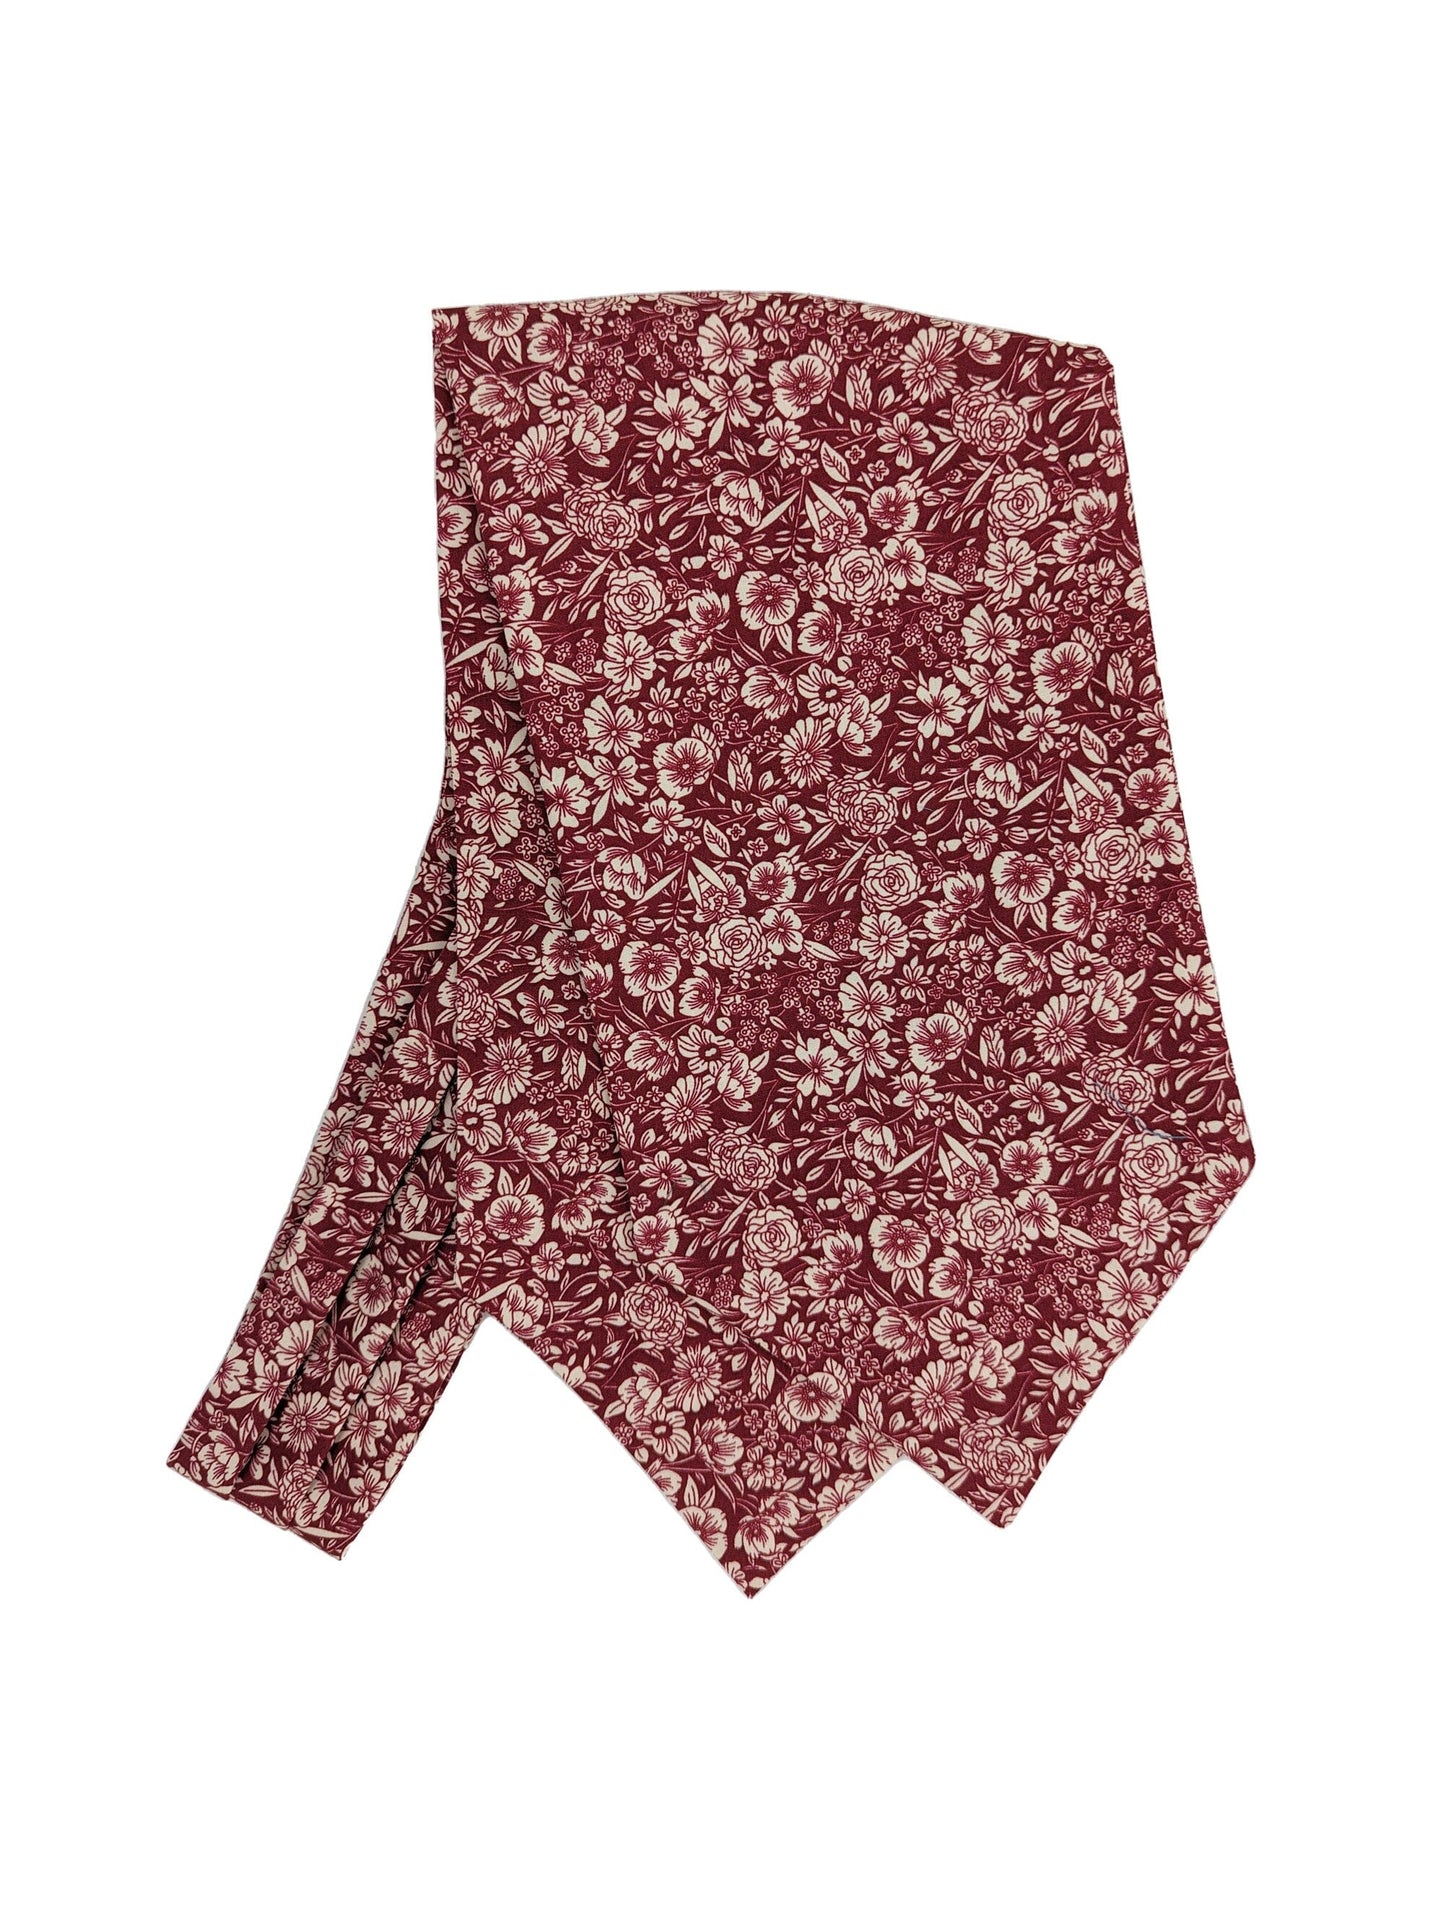 Cherry Red Floral Cotton Cravat - Cravats - - THREADPEPPER